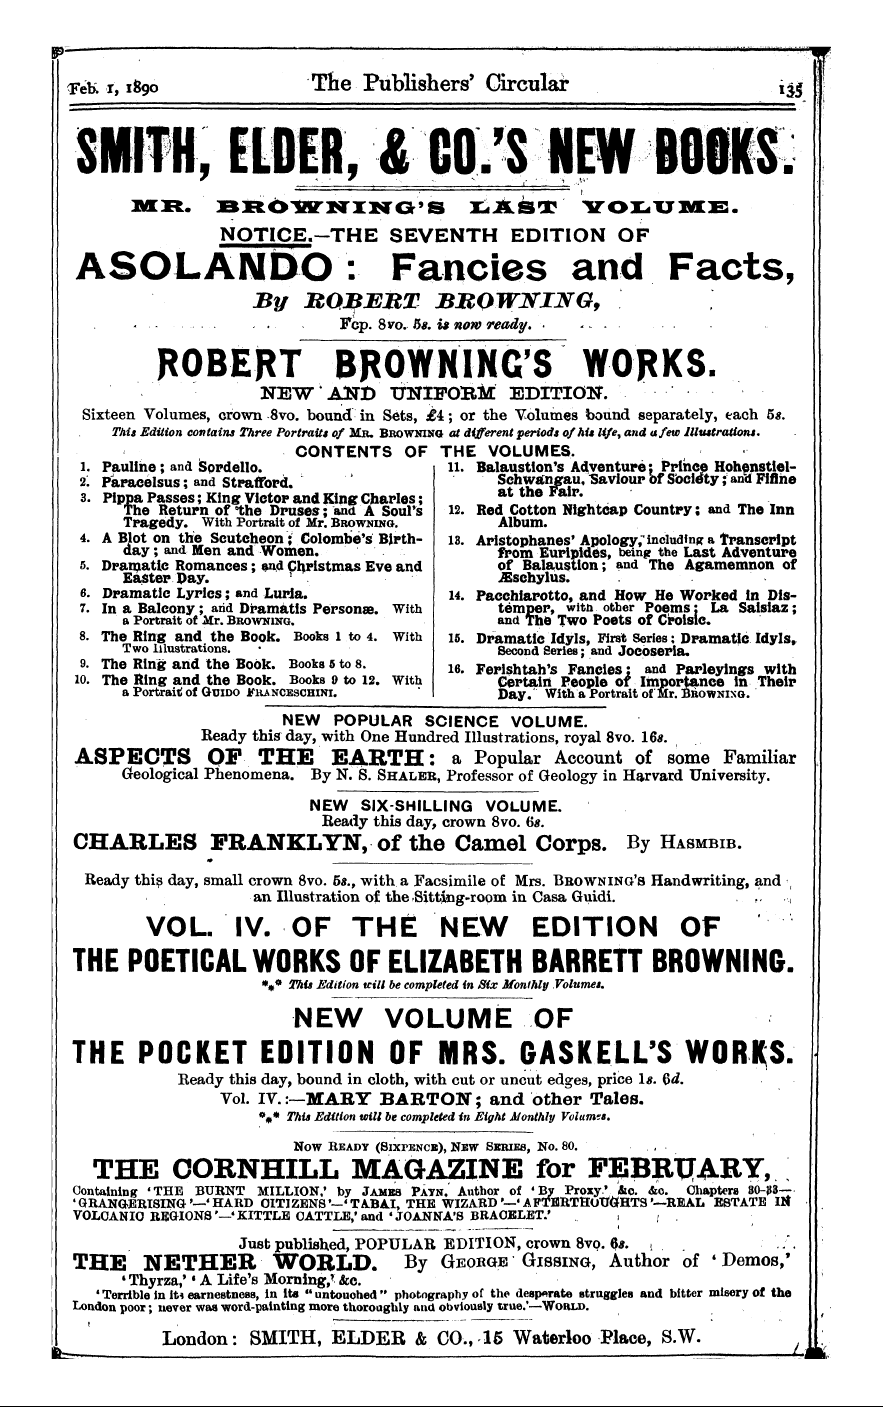 Publishers’ Circular (1880-1890): jS F Y, 1st edition: 33